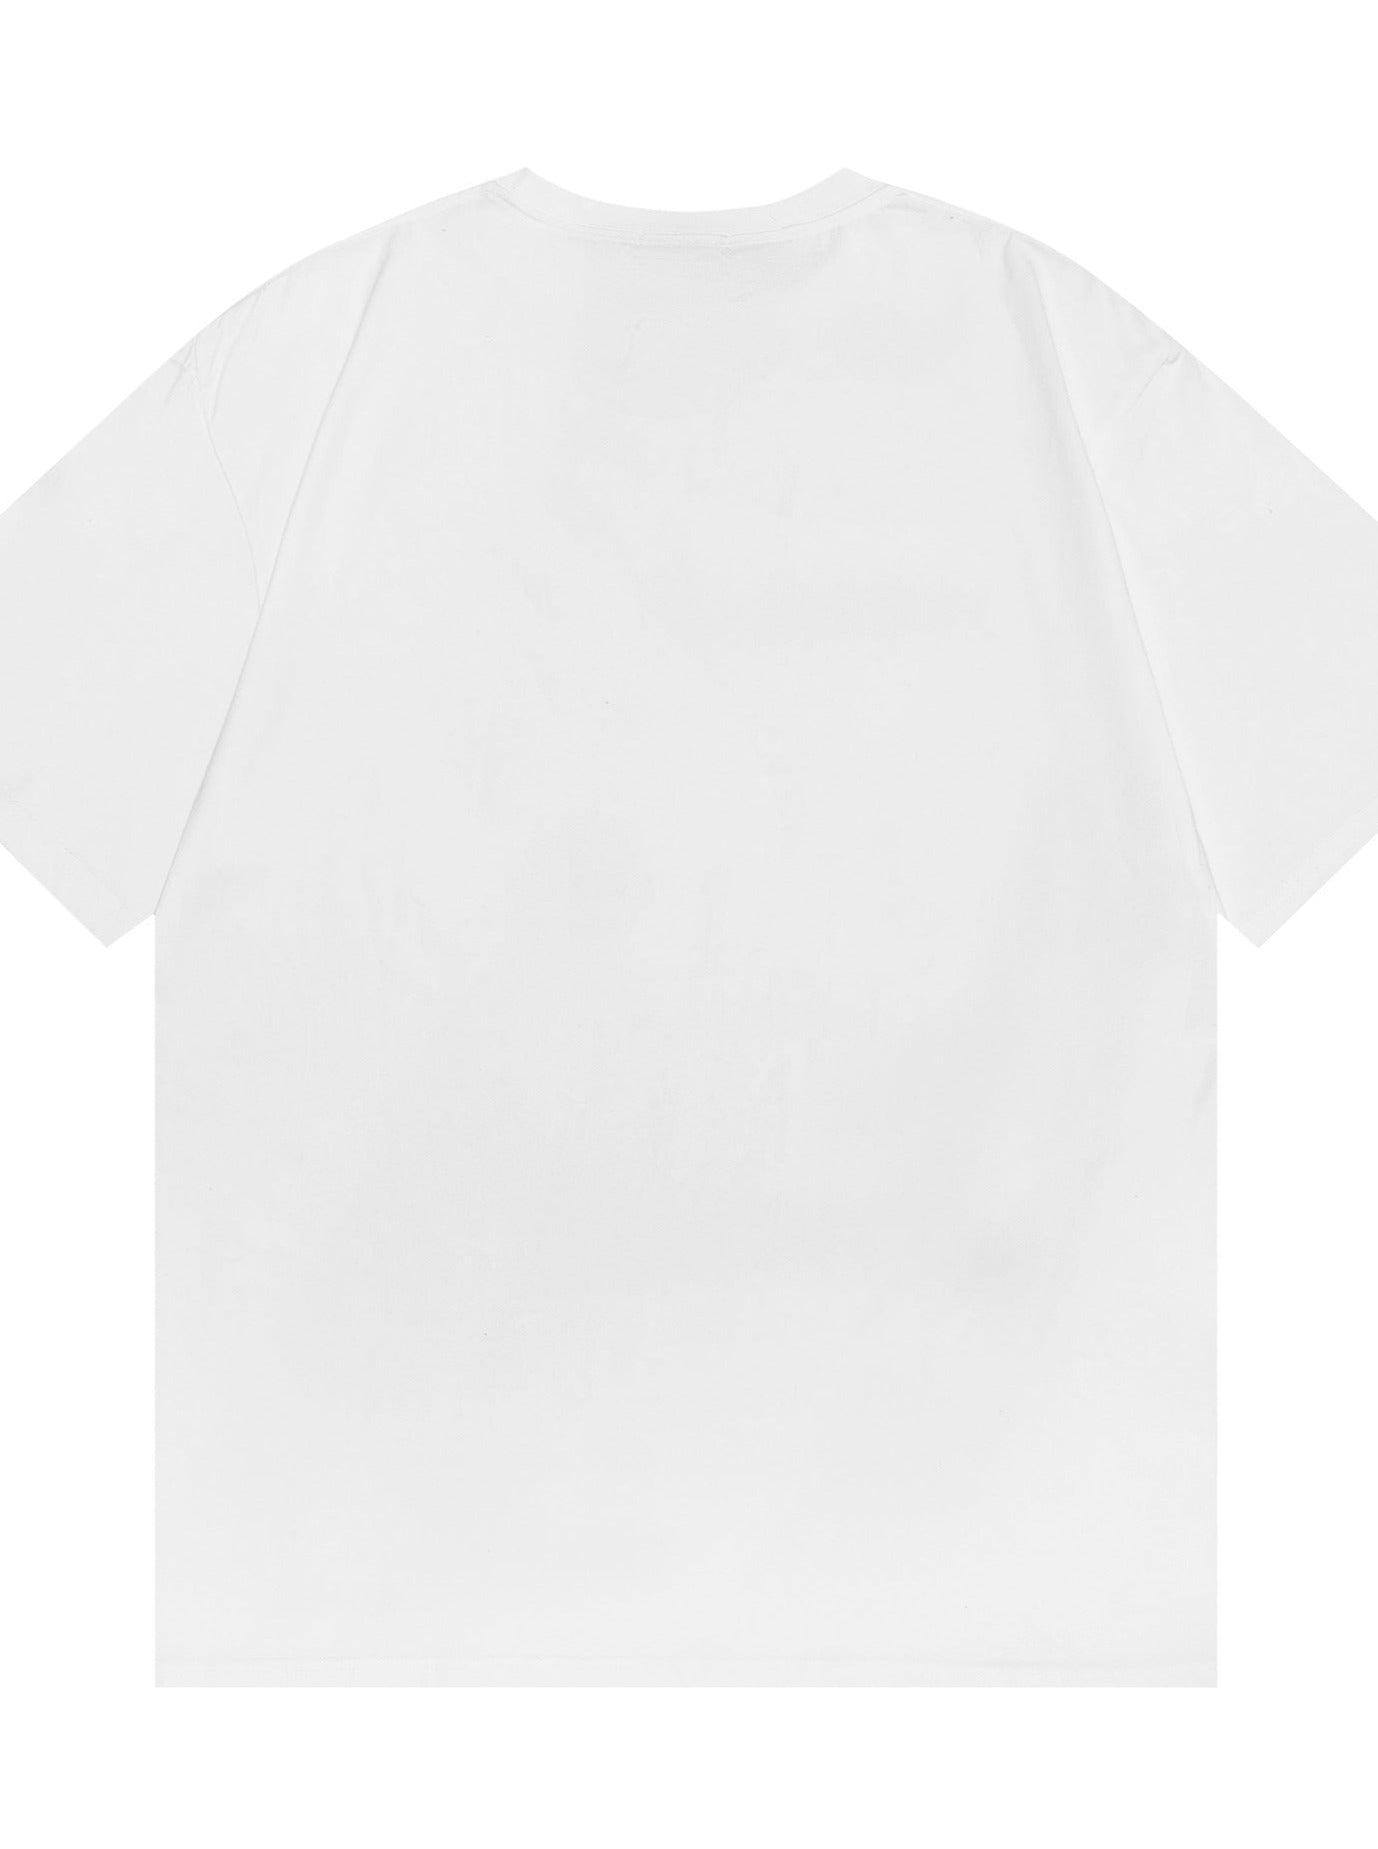 ACCENT 270g创意印花情侣短袖T恤男ins潮牌复古半袖体恤衫短t-shirt